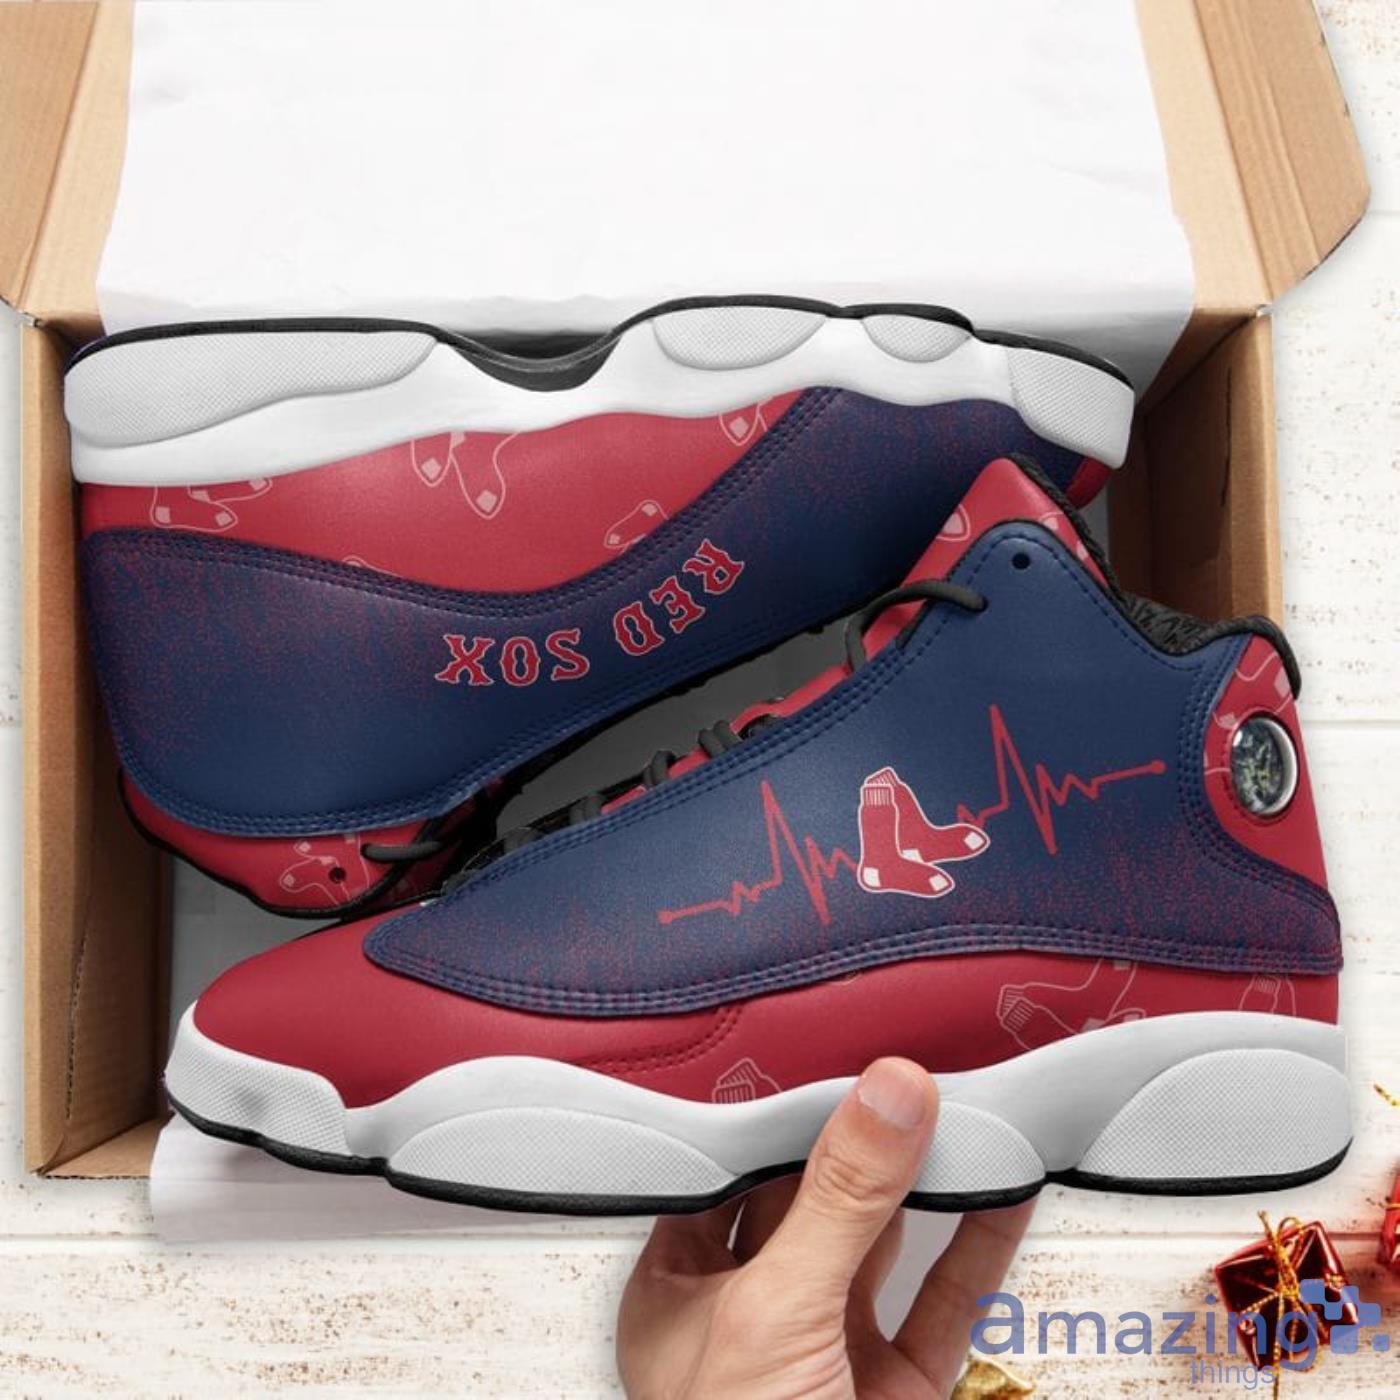 Boston Red Sox Air Jordan 13 Shoes For Fans